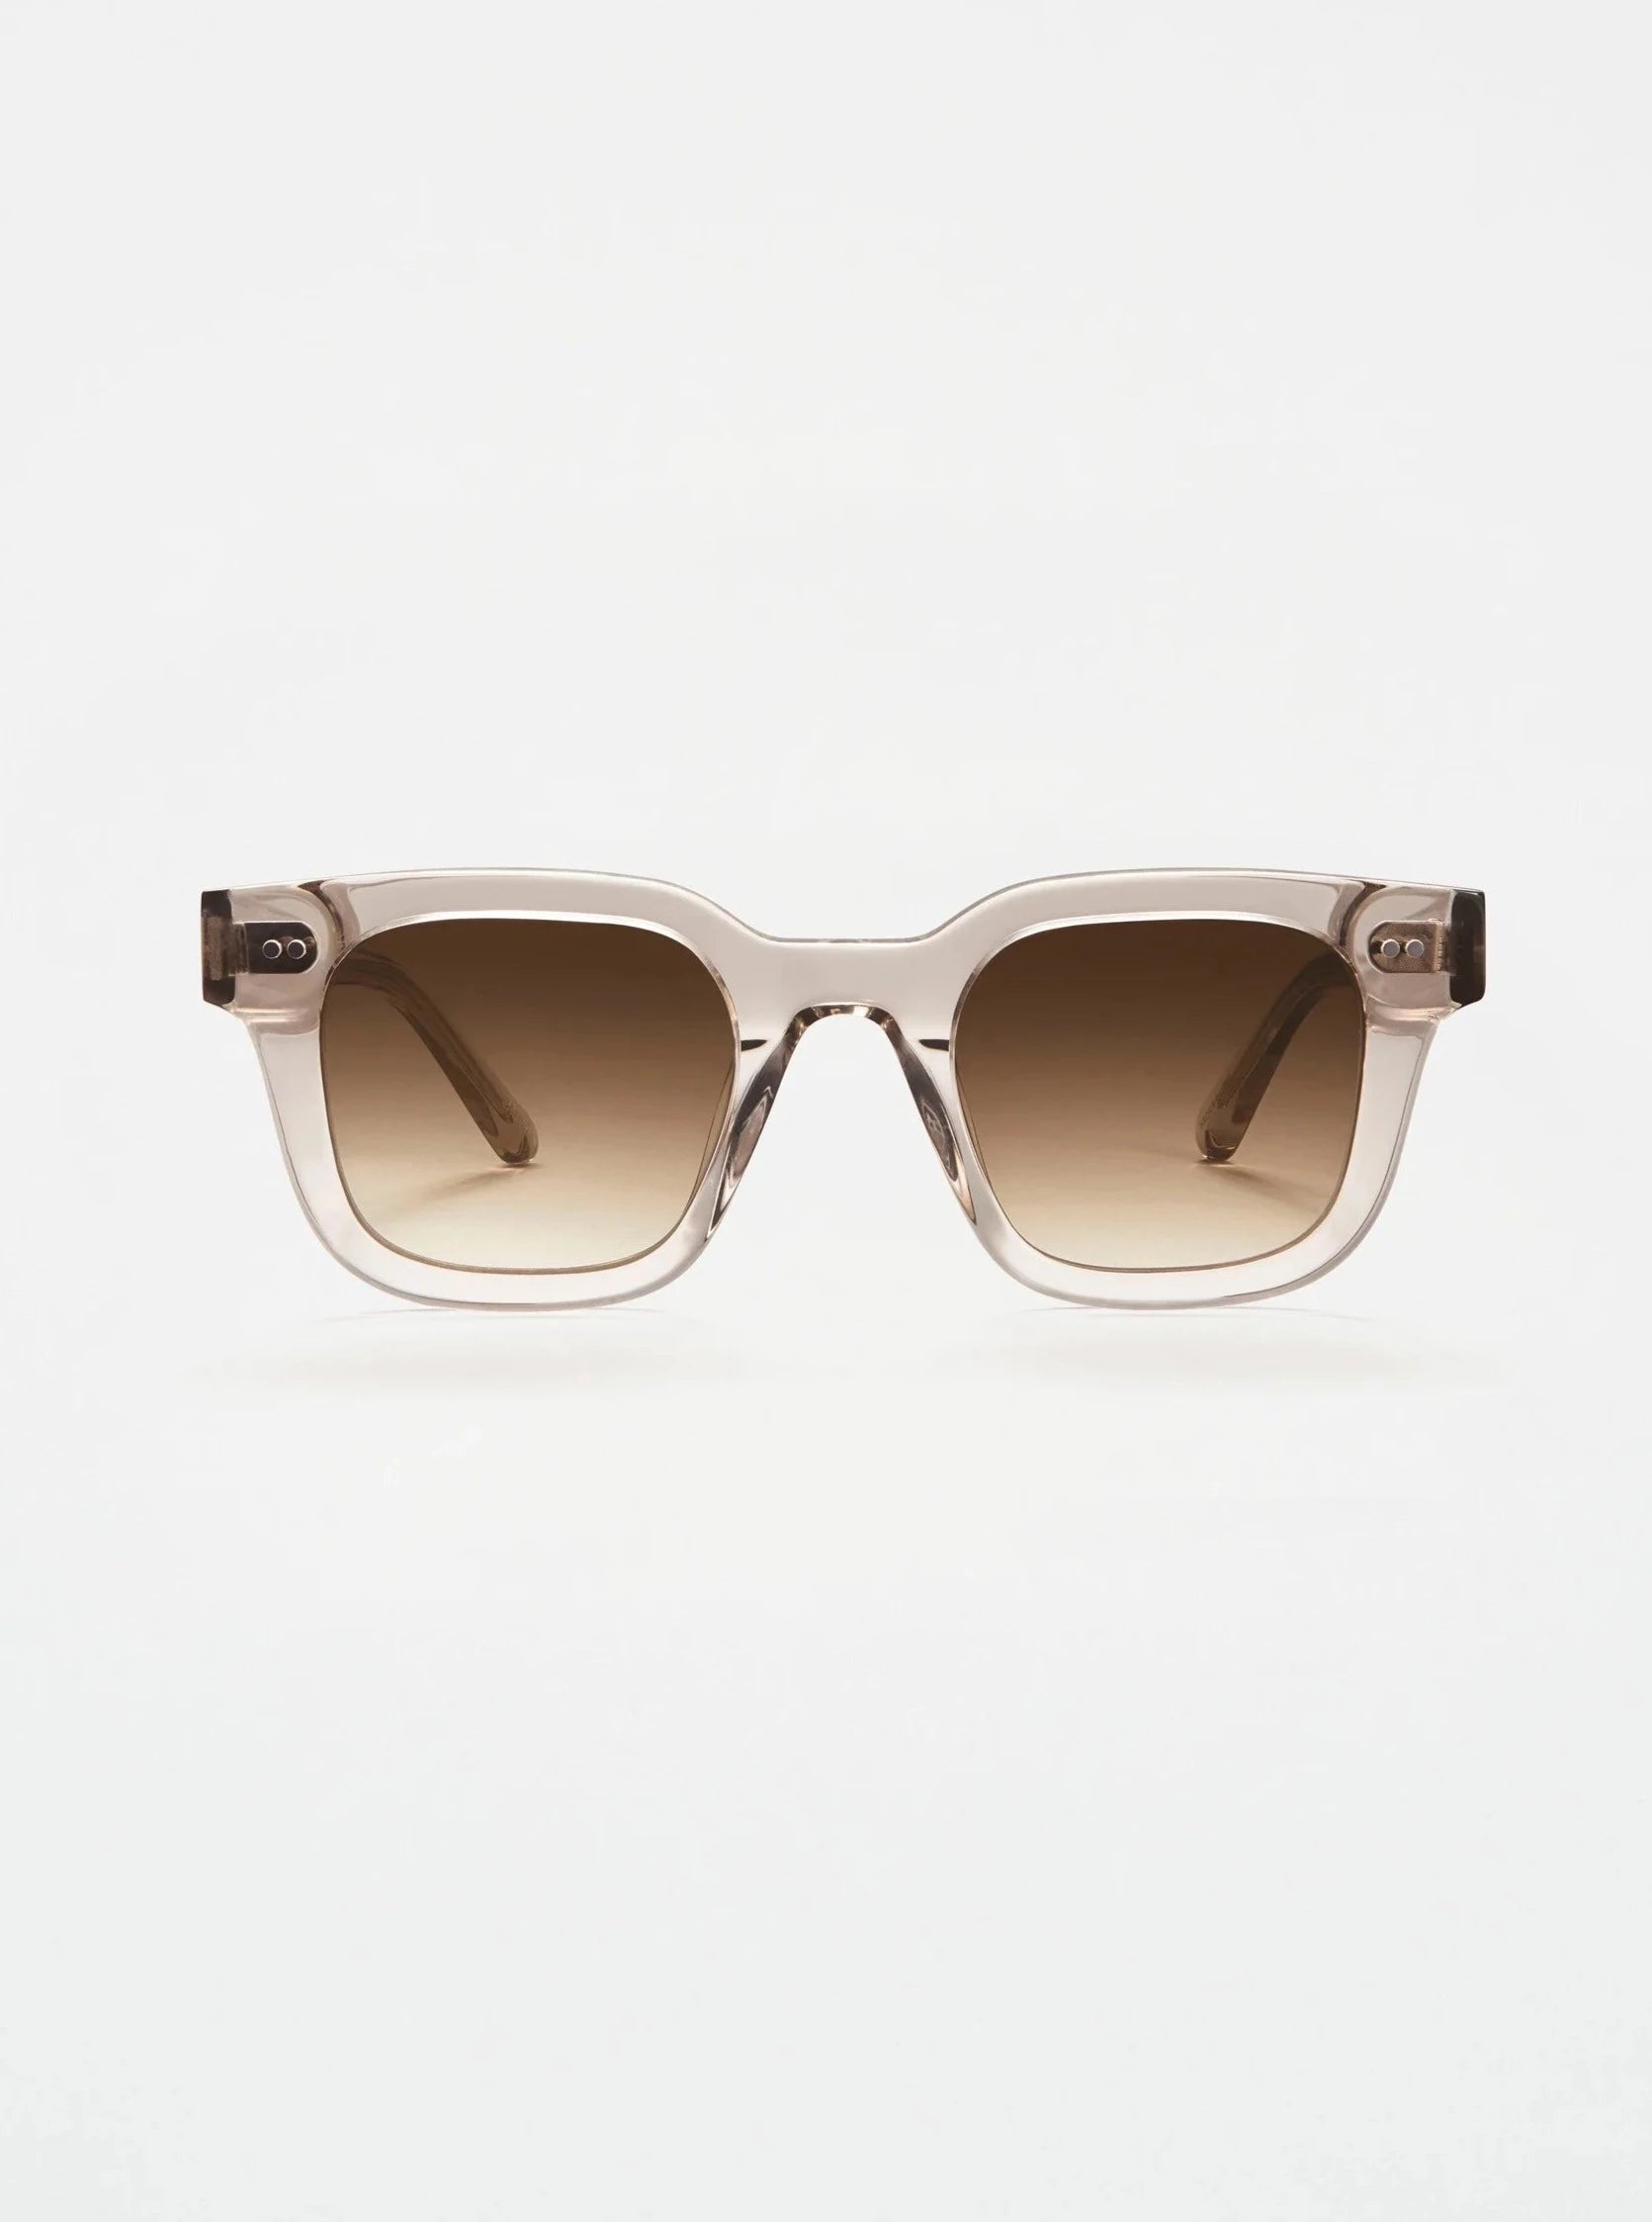 Chimi 04 sunglasses - Ecru - Vincent Park - {{shop.address.city}} {{ shop.address.country }}